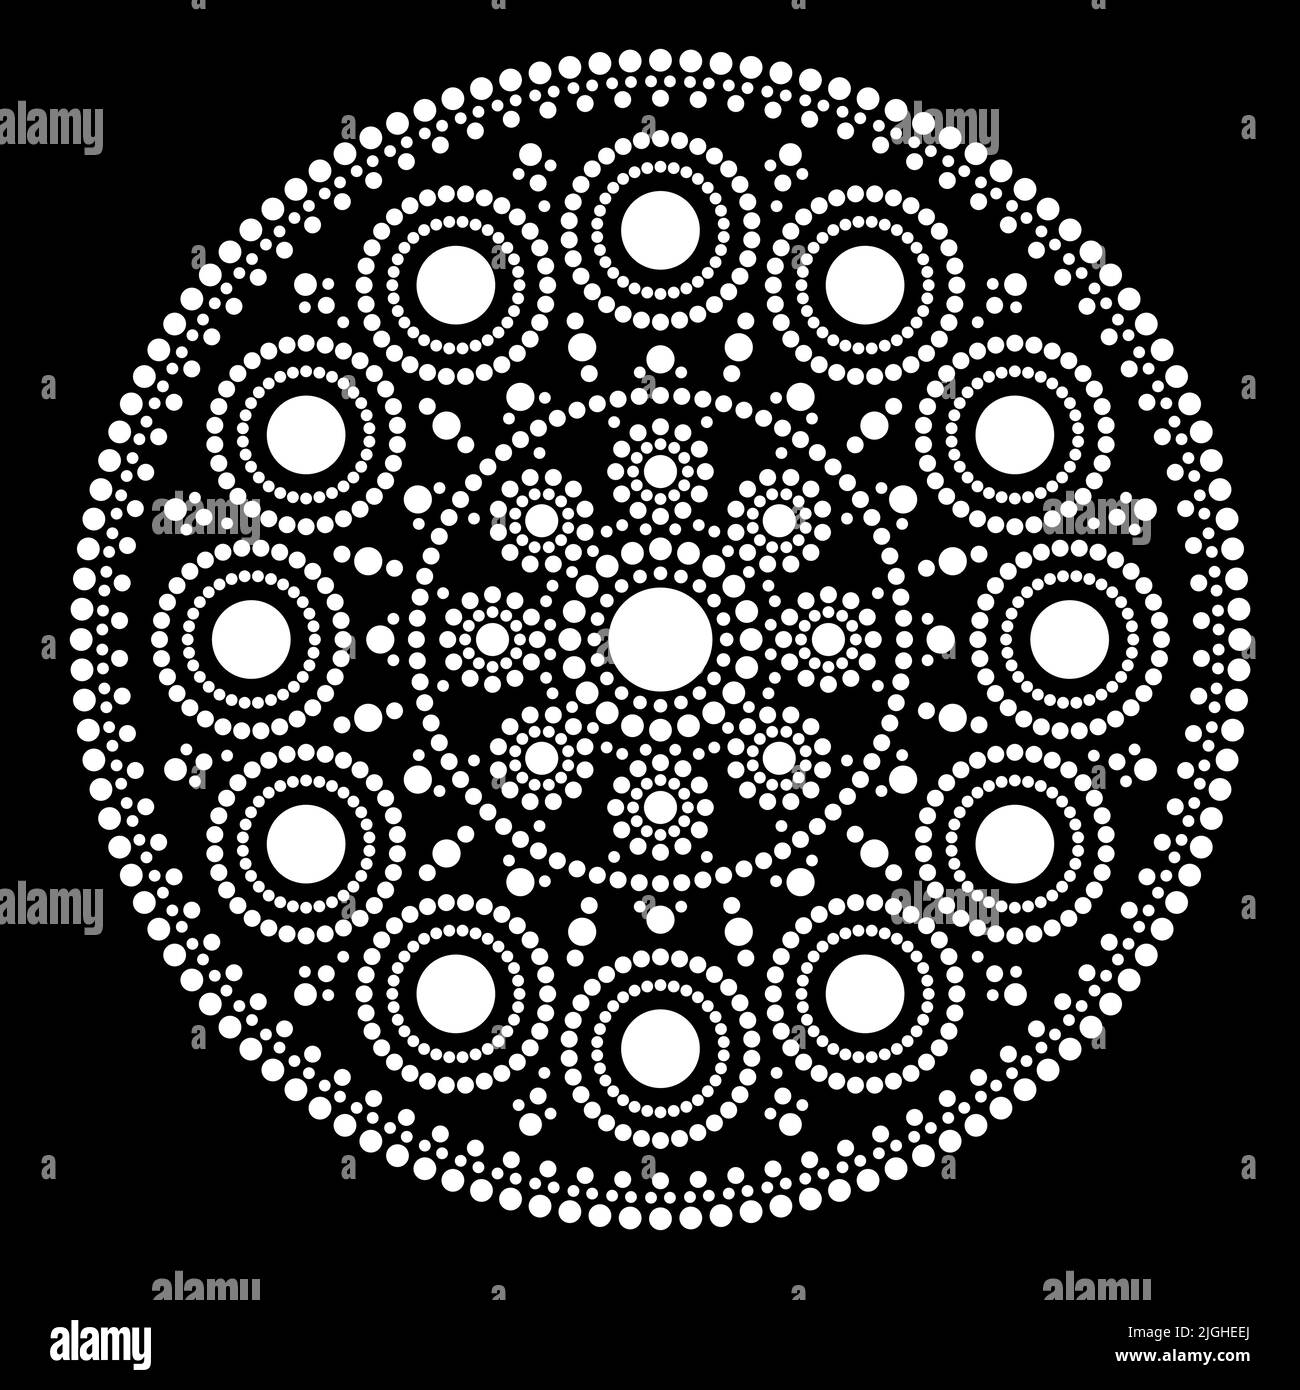 Dot painting mandala design black and white. Tribal style whimsical decoration. Aboriginal circle ornament. Stock Vector